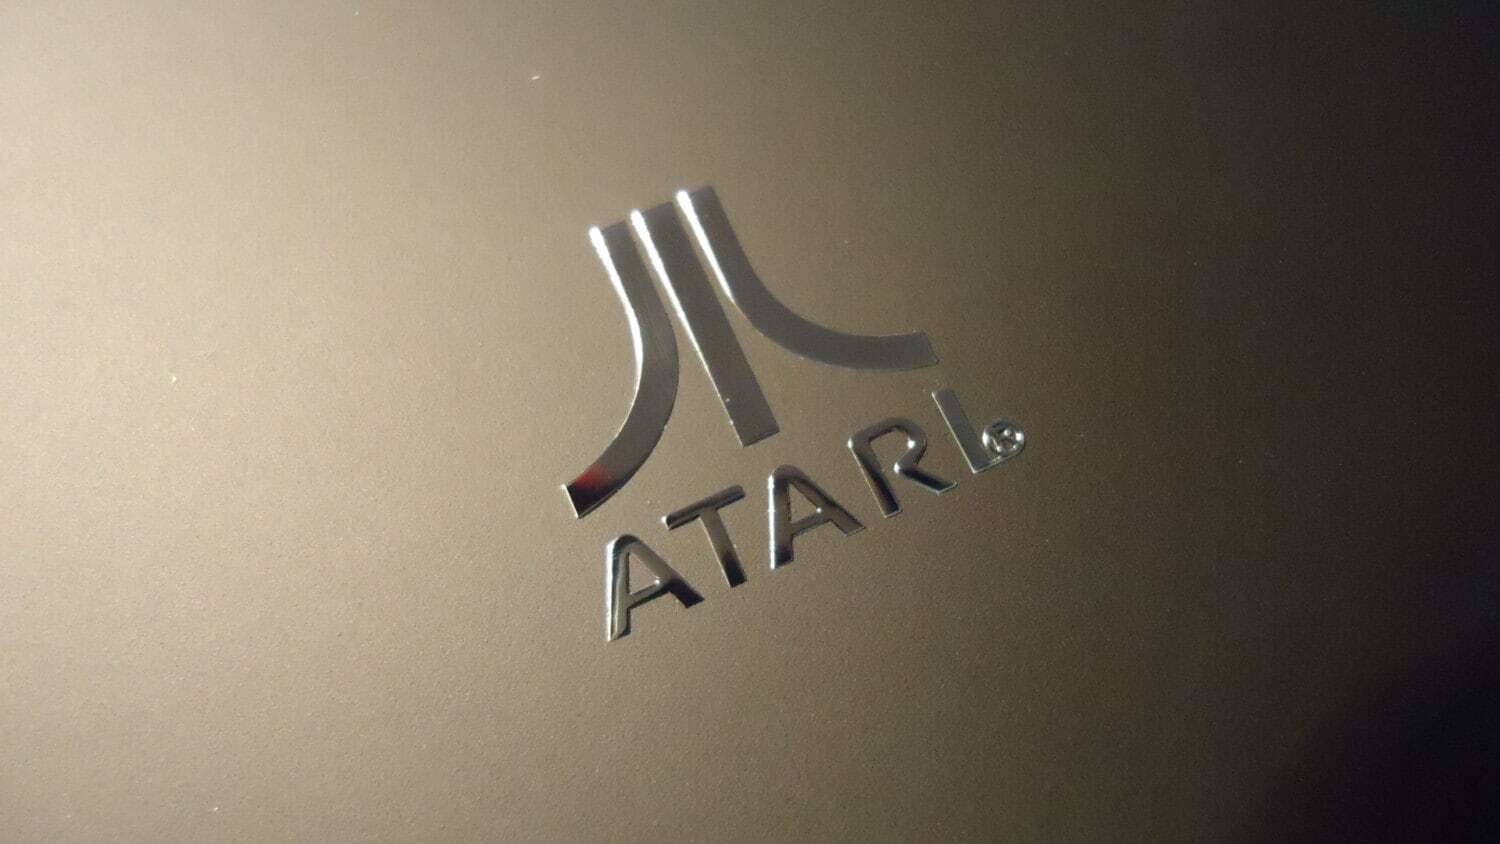 Atari Label / Aufkleber / Sticker / Badge / Logo [134]